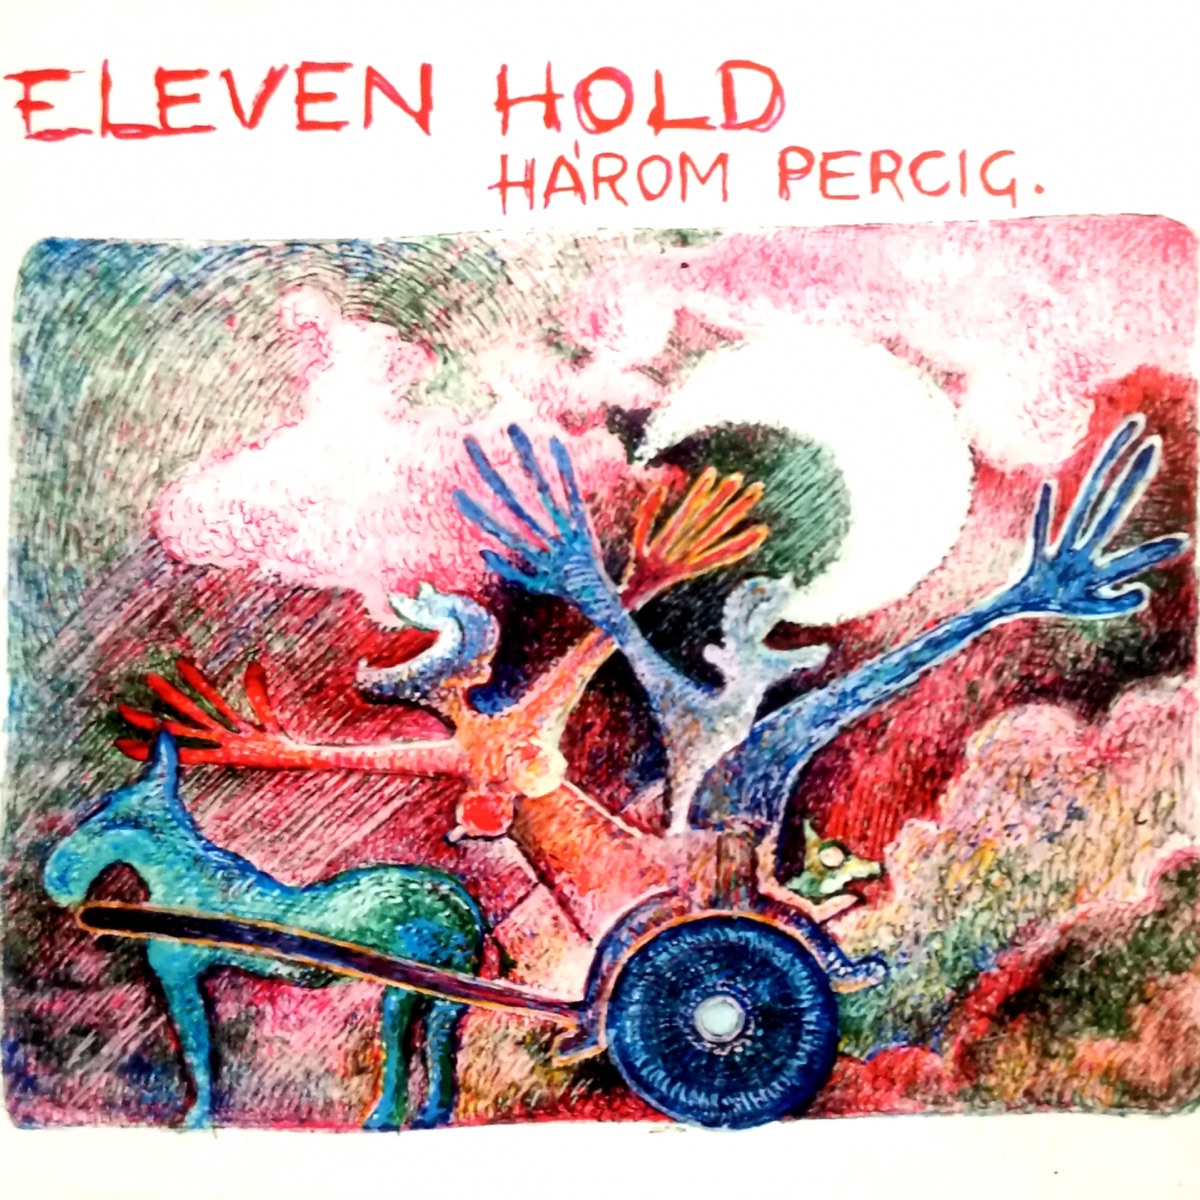 Fél százalék - EP - Album by Eleven hold - Apple Music